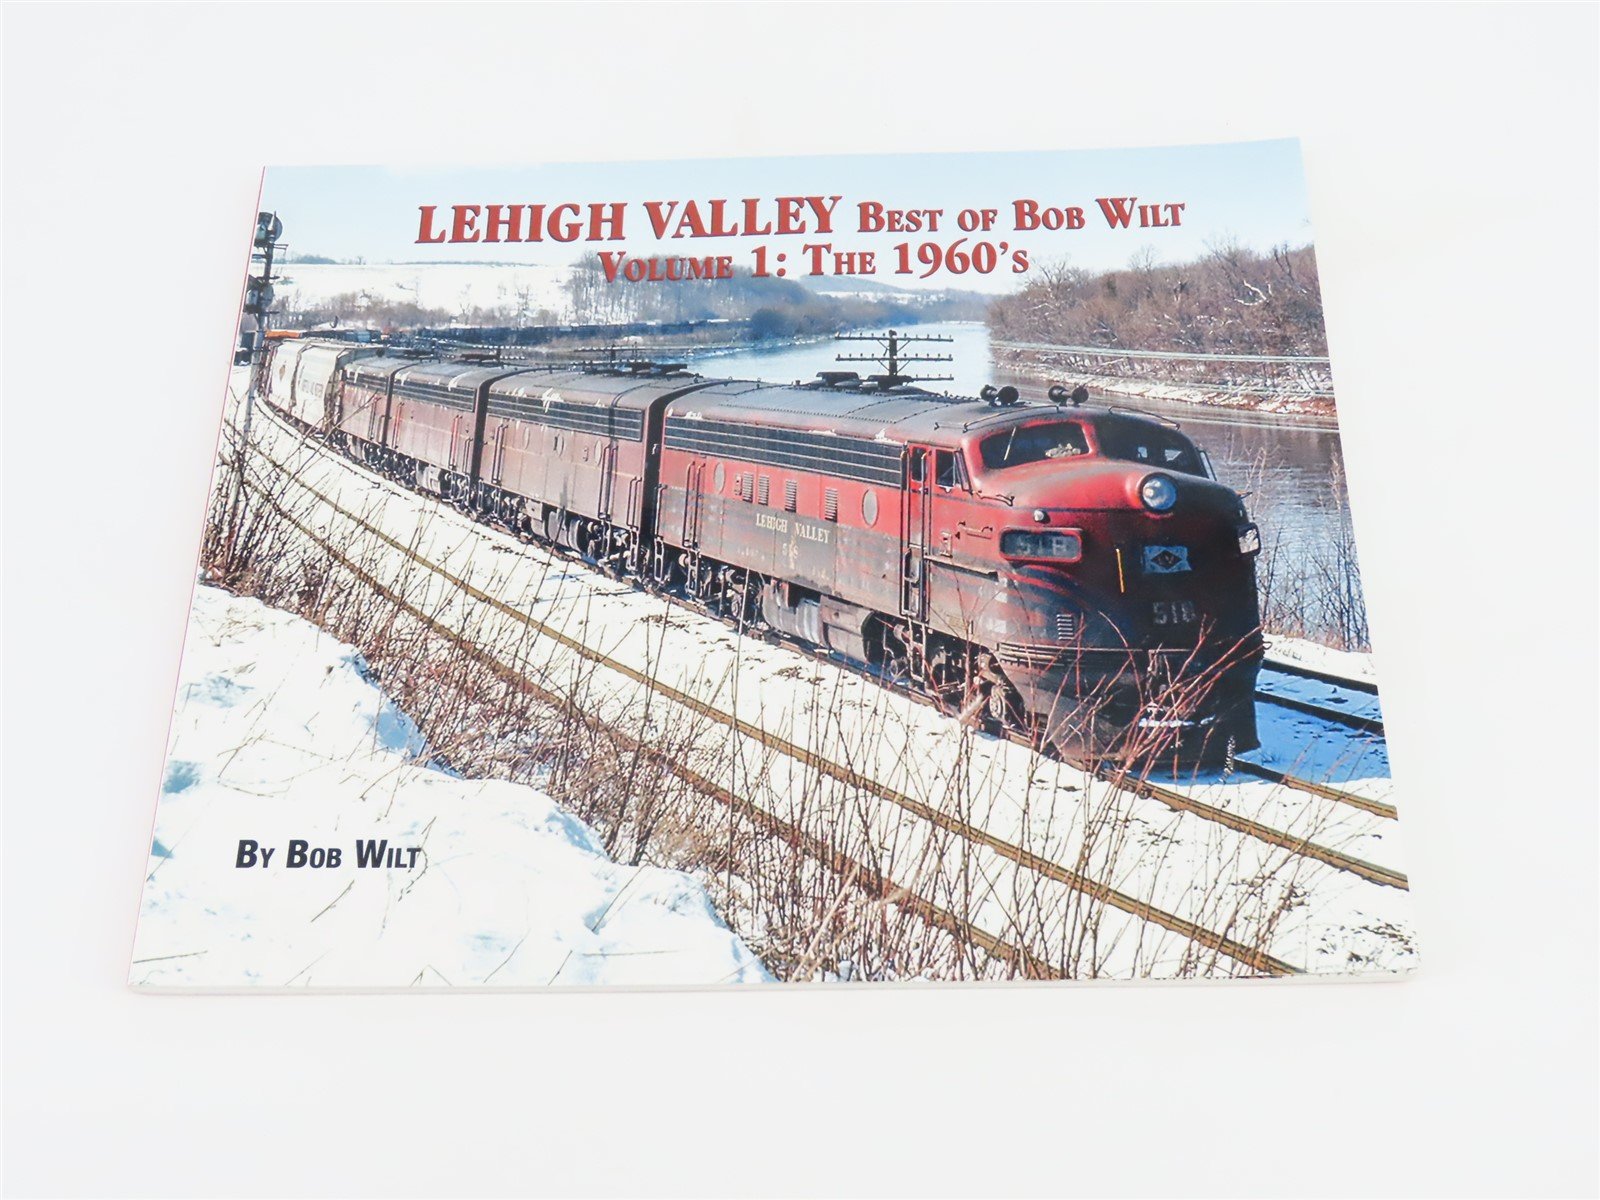 Morning Sun: Lehigh Valley Volume 1: The 1960's by Bob Wilt ©2017 SC Book